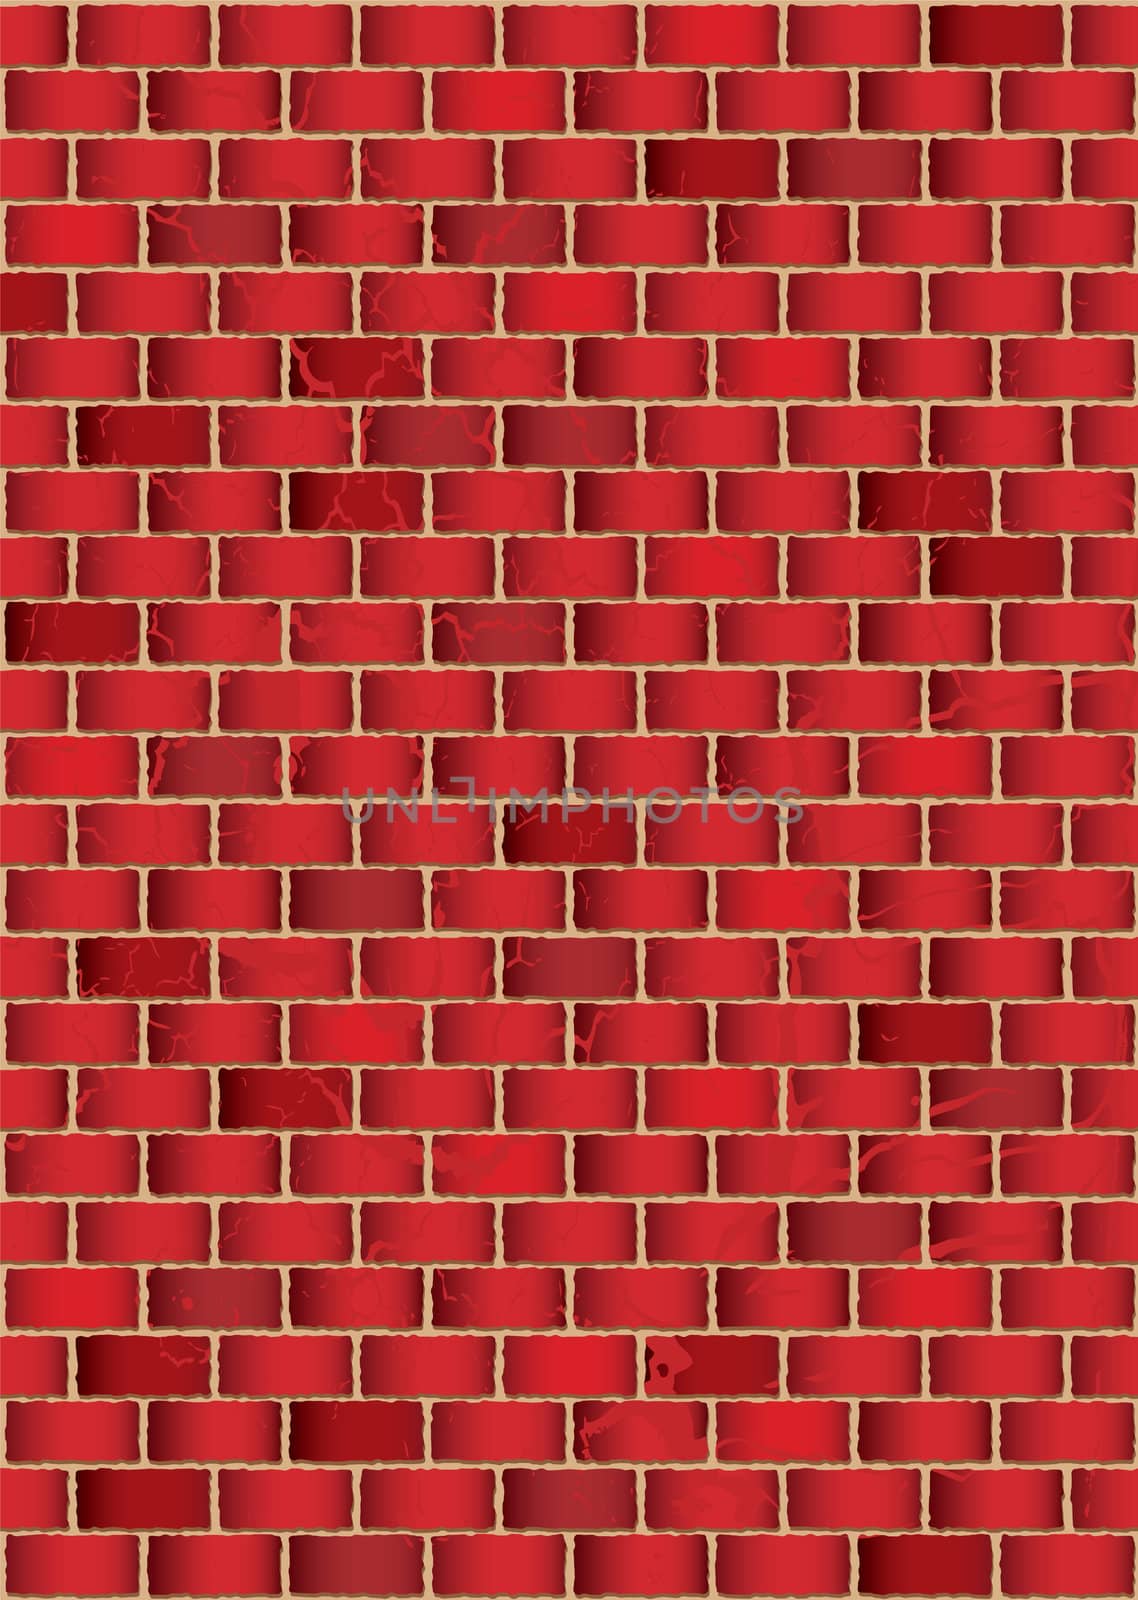 grunge red brick wall by nicemonkey